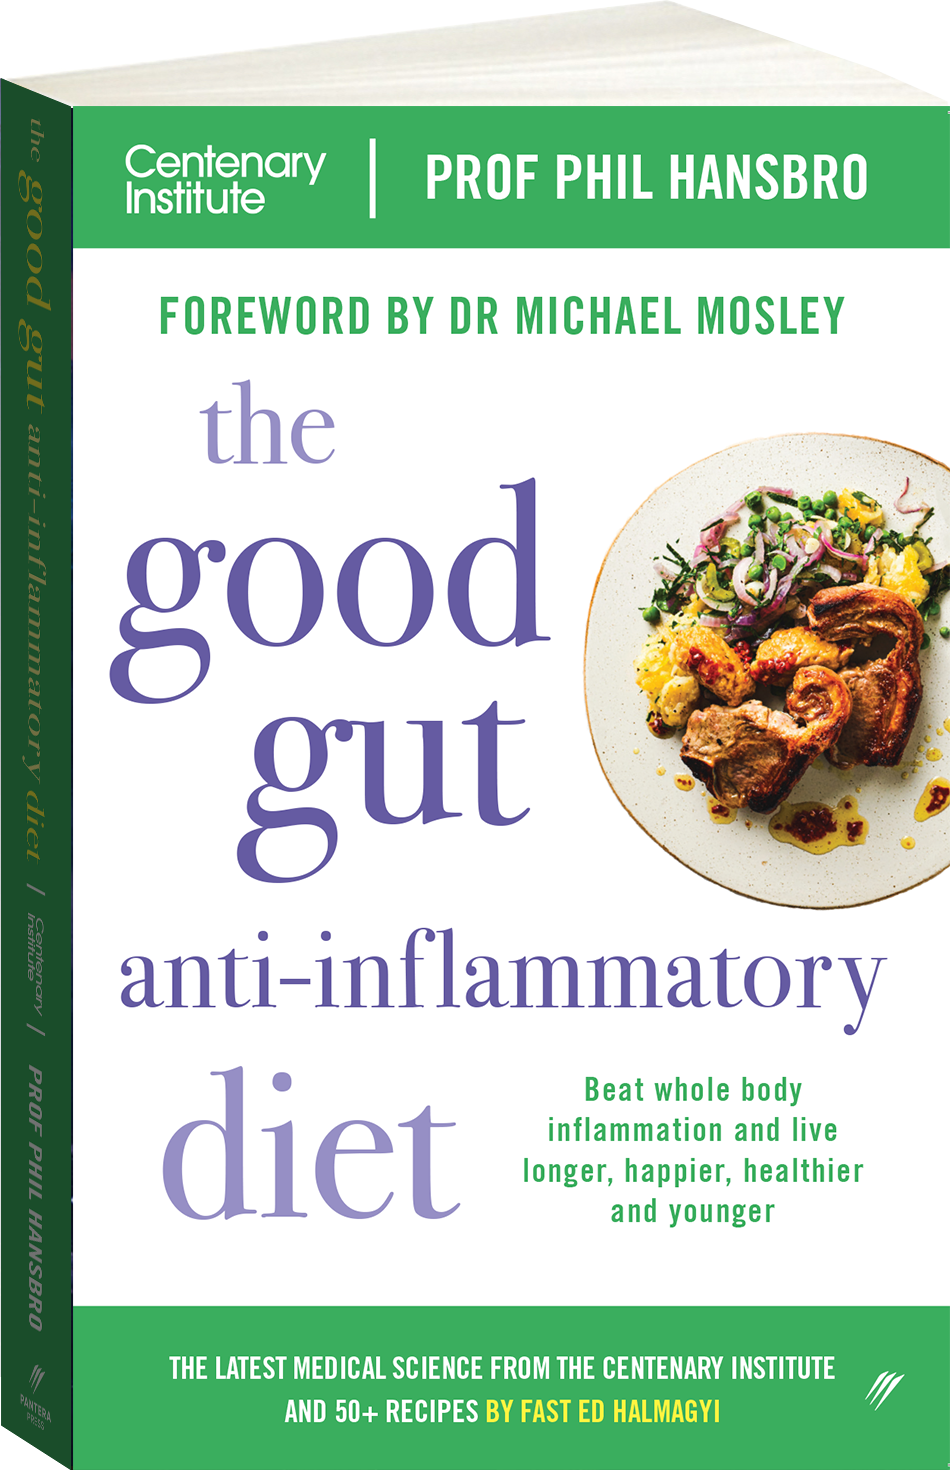 The Good Gut Anti-inflammatory Diet by Prof Phil Hansbro